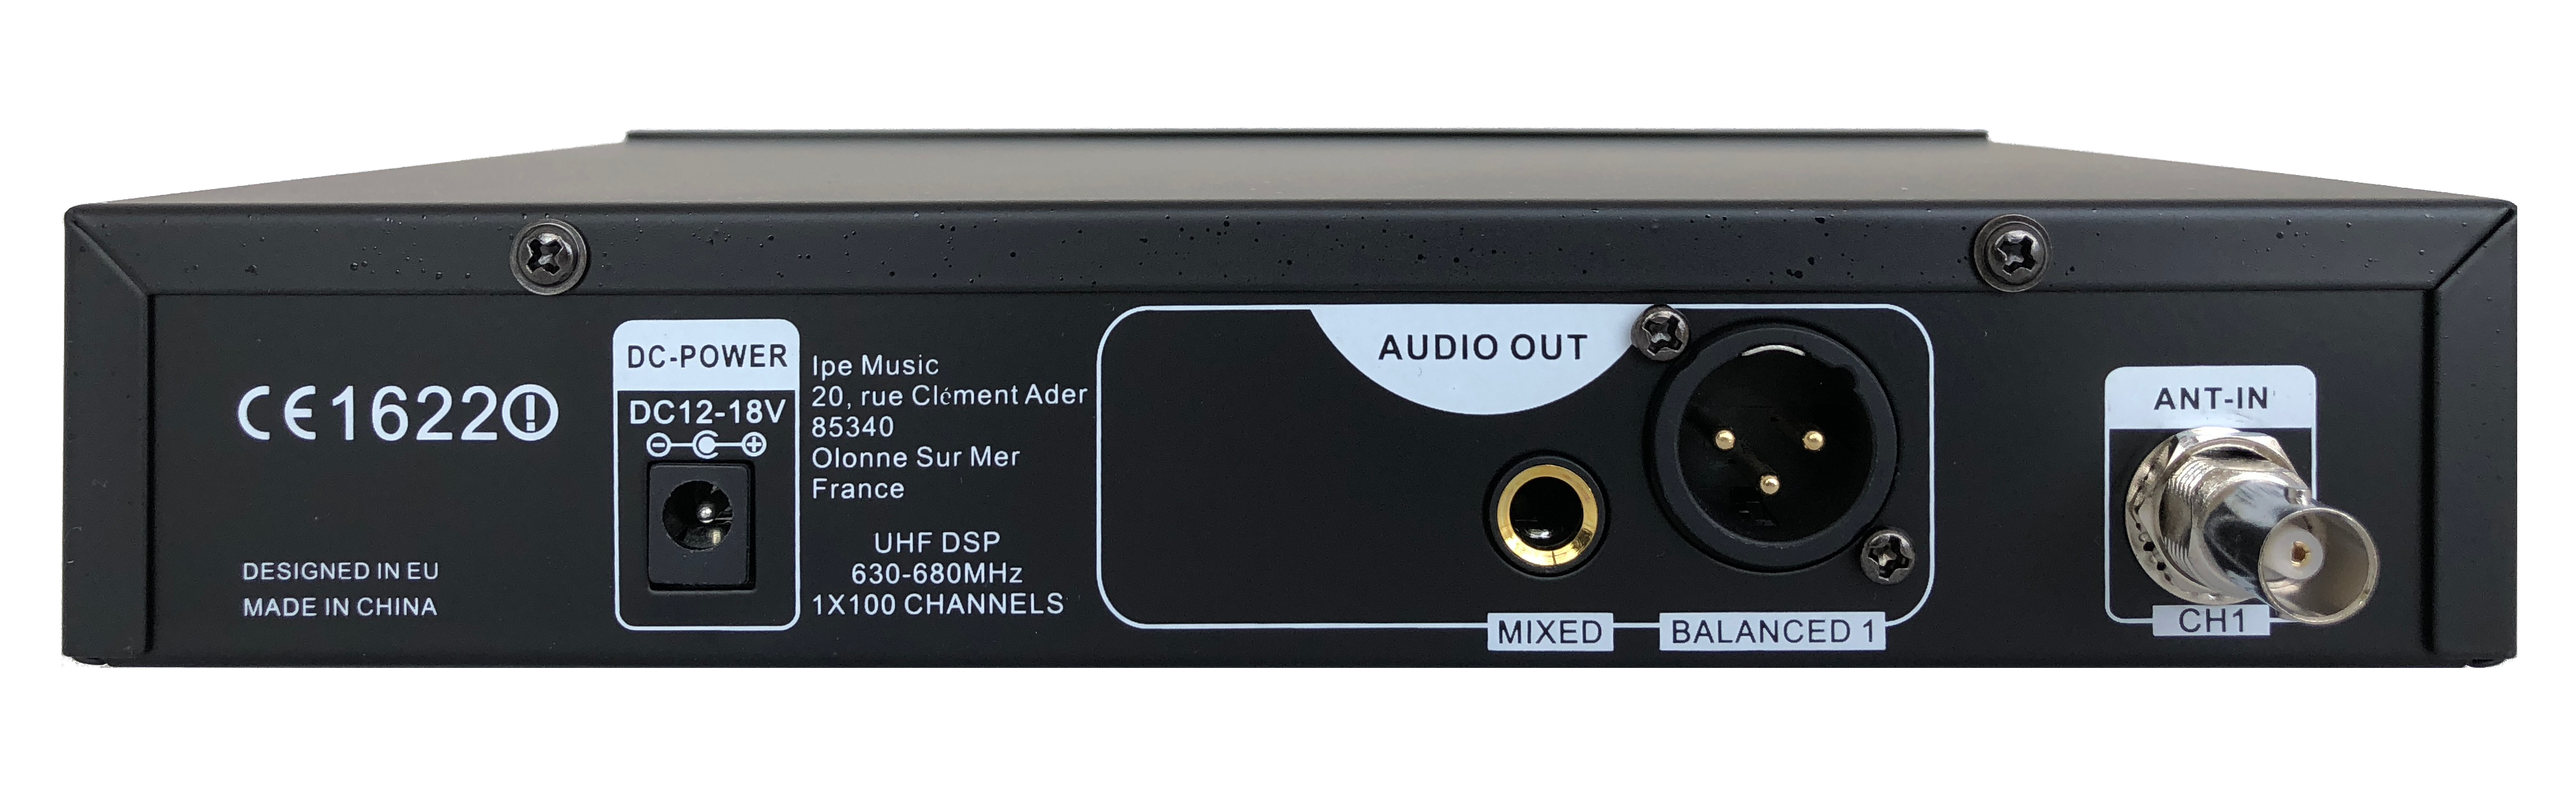 Prodipe Audio UHF SB21 DSP   